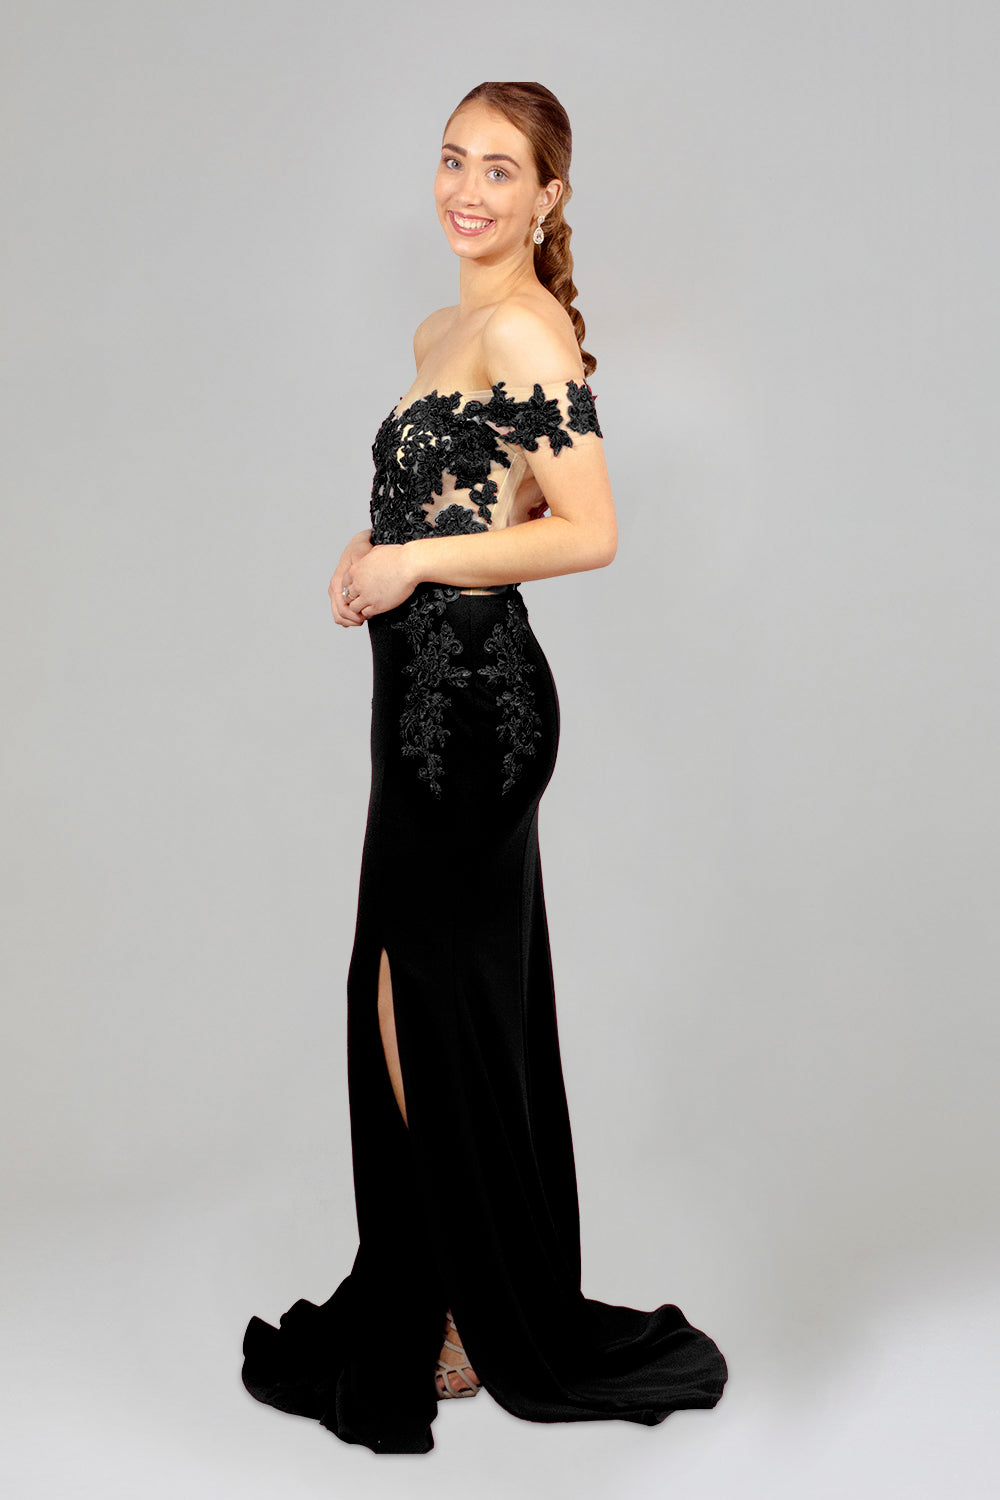 custom made black bridesmaid dresses perth australia envious bridal & formal